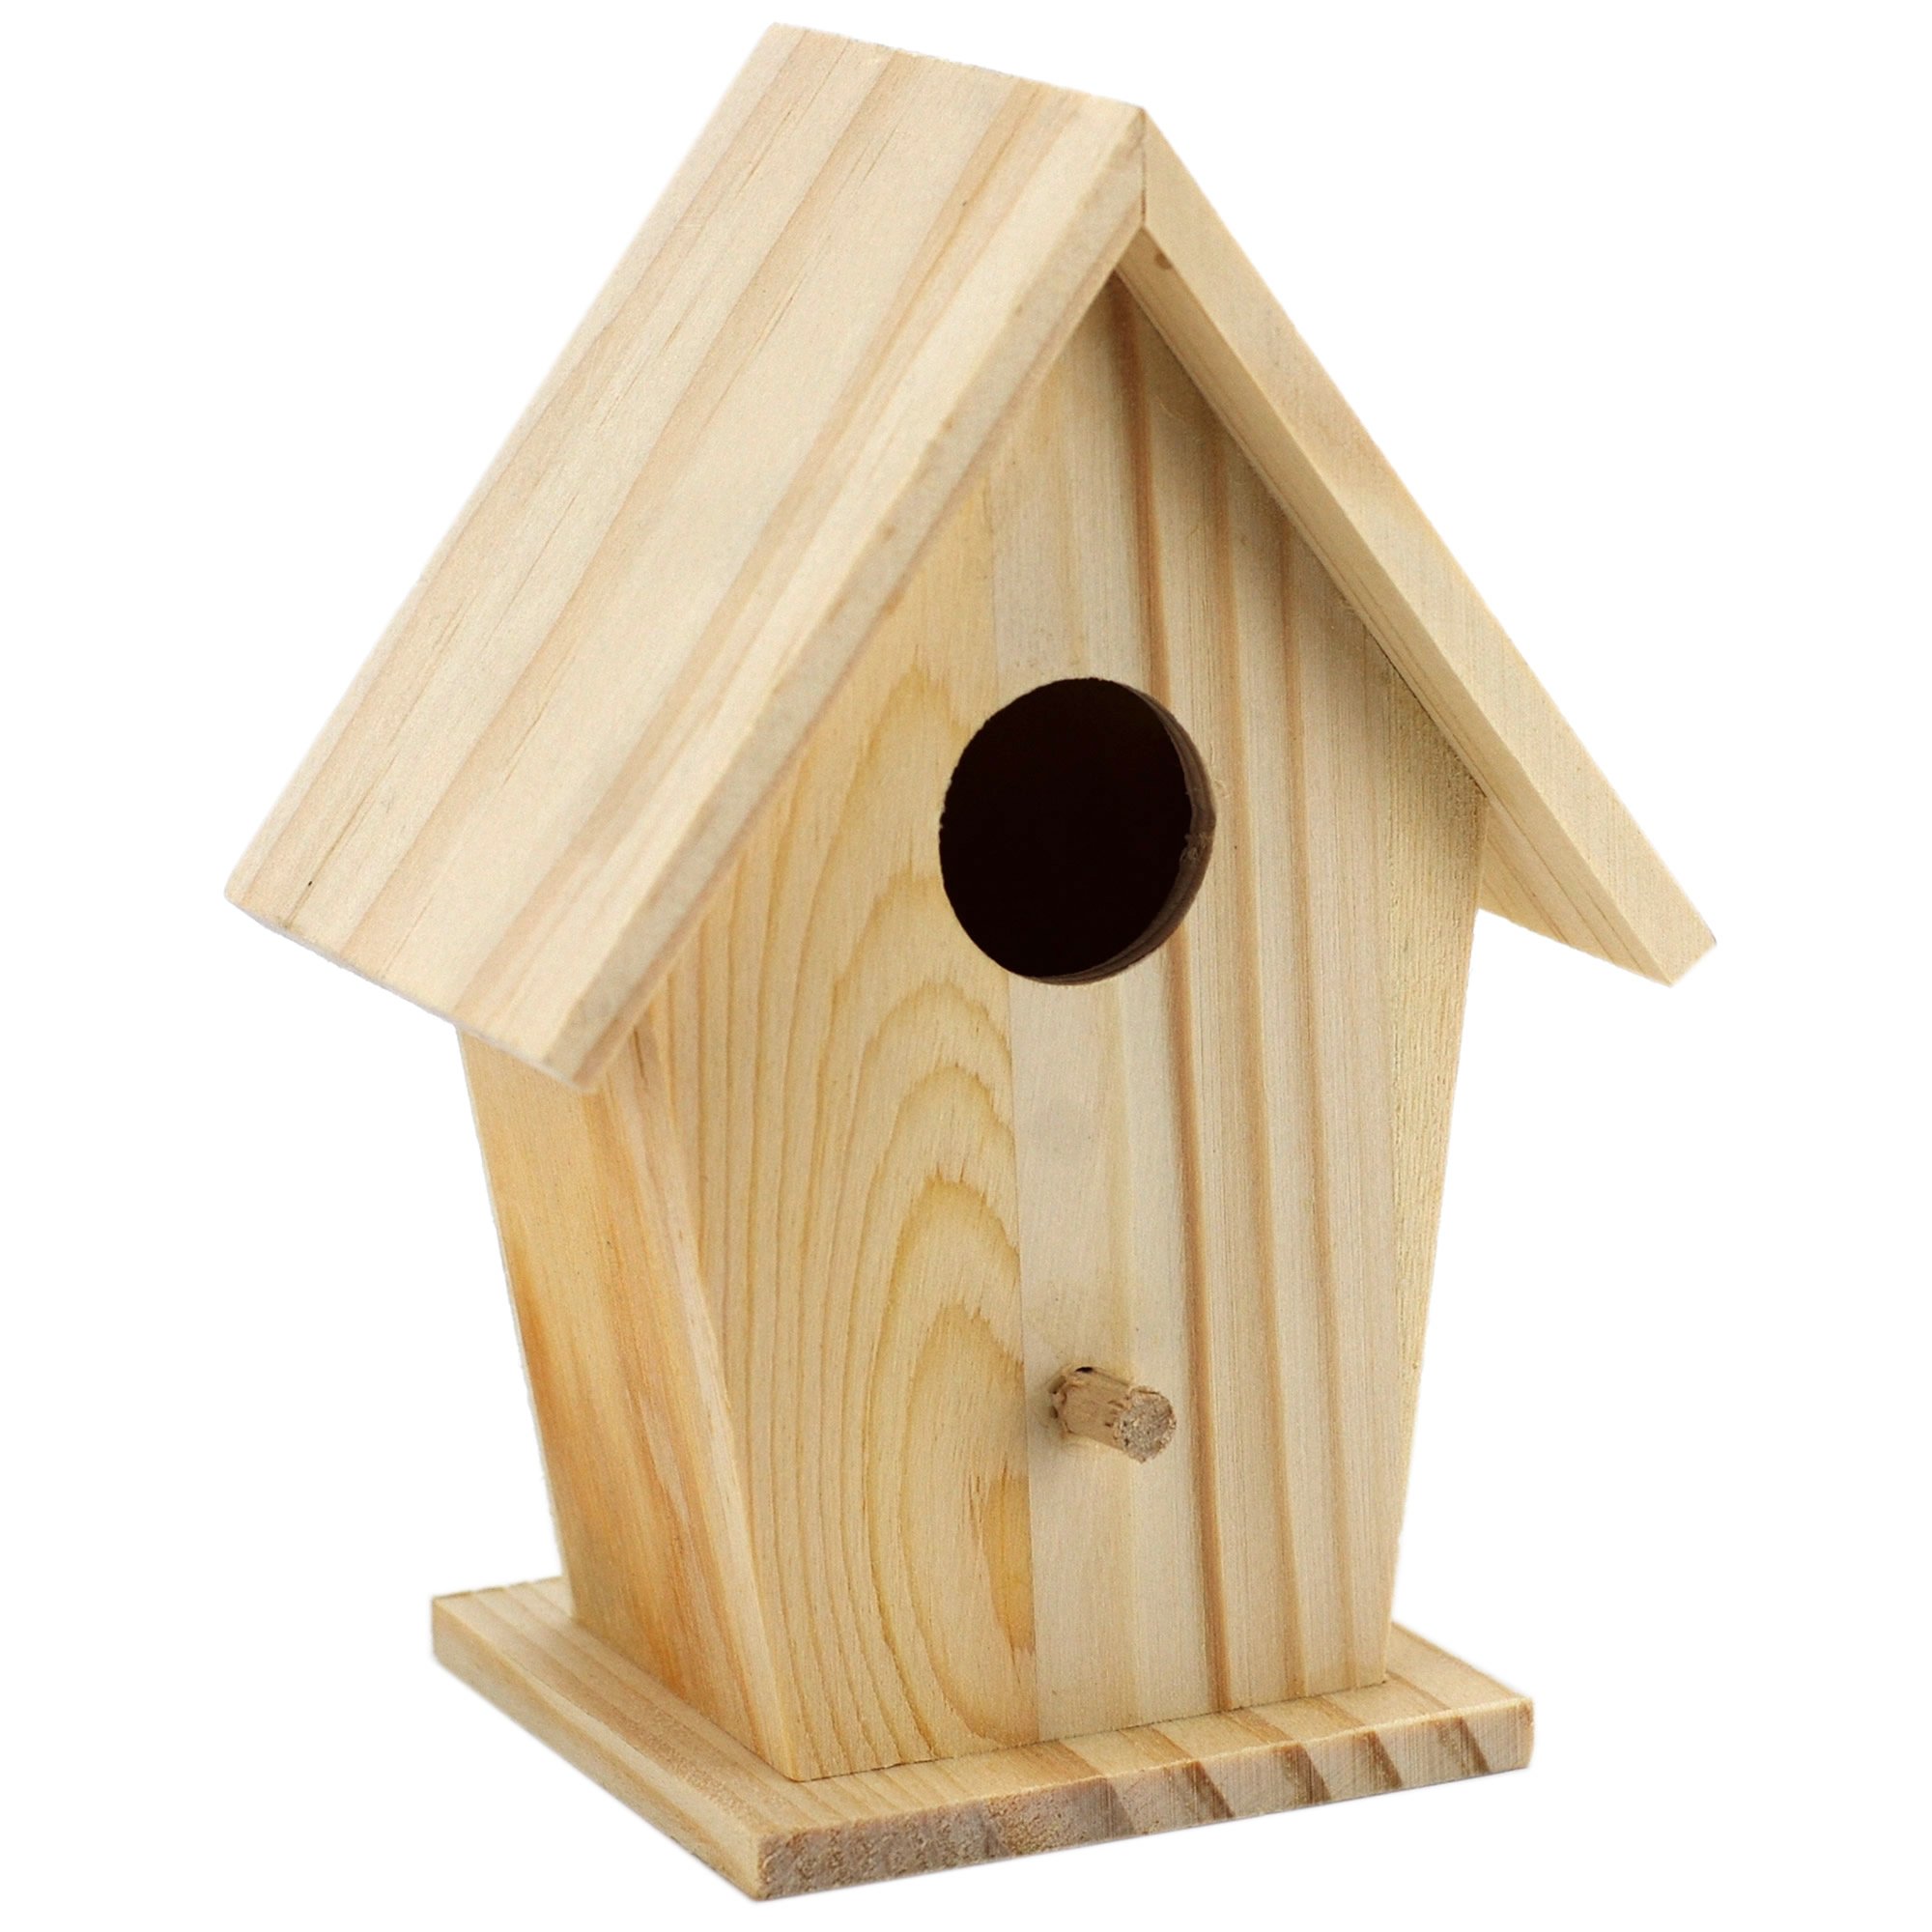 Birdhouse Build Wooden Bird House Kit For Kids X Kits Houses ...